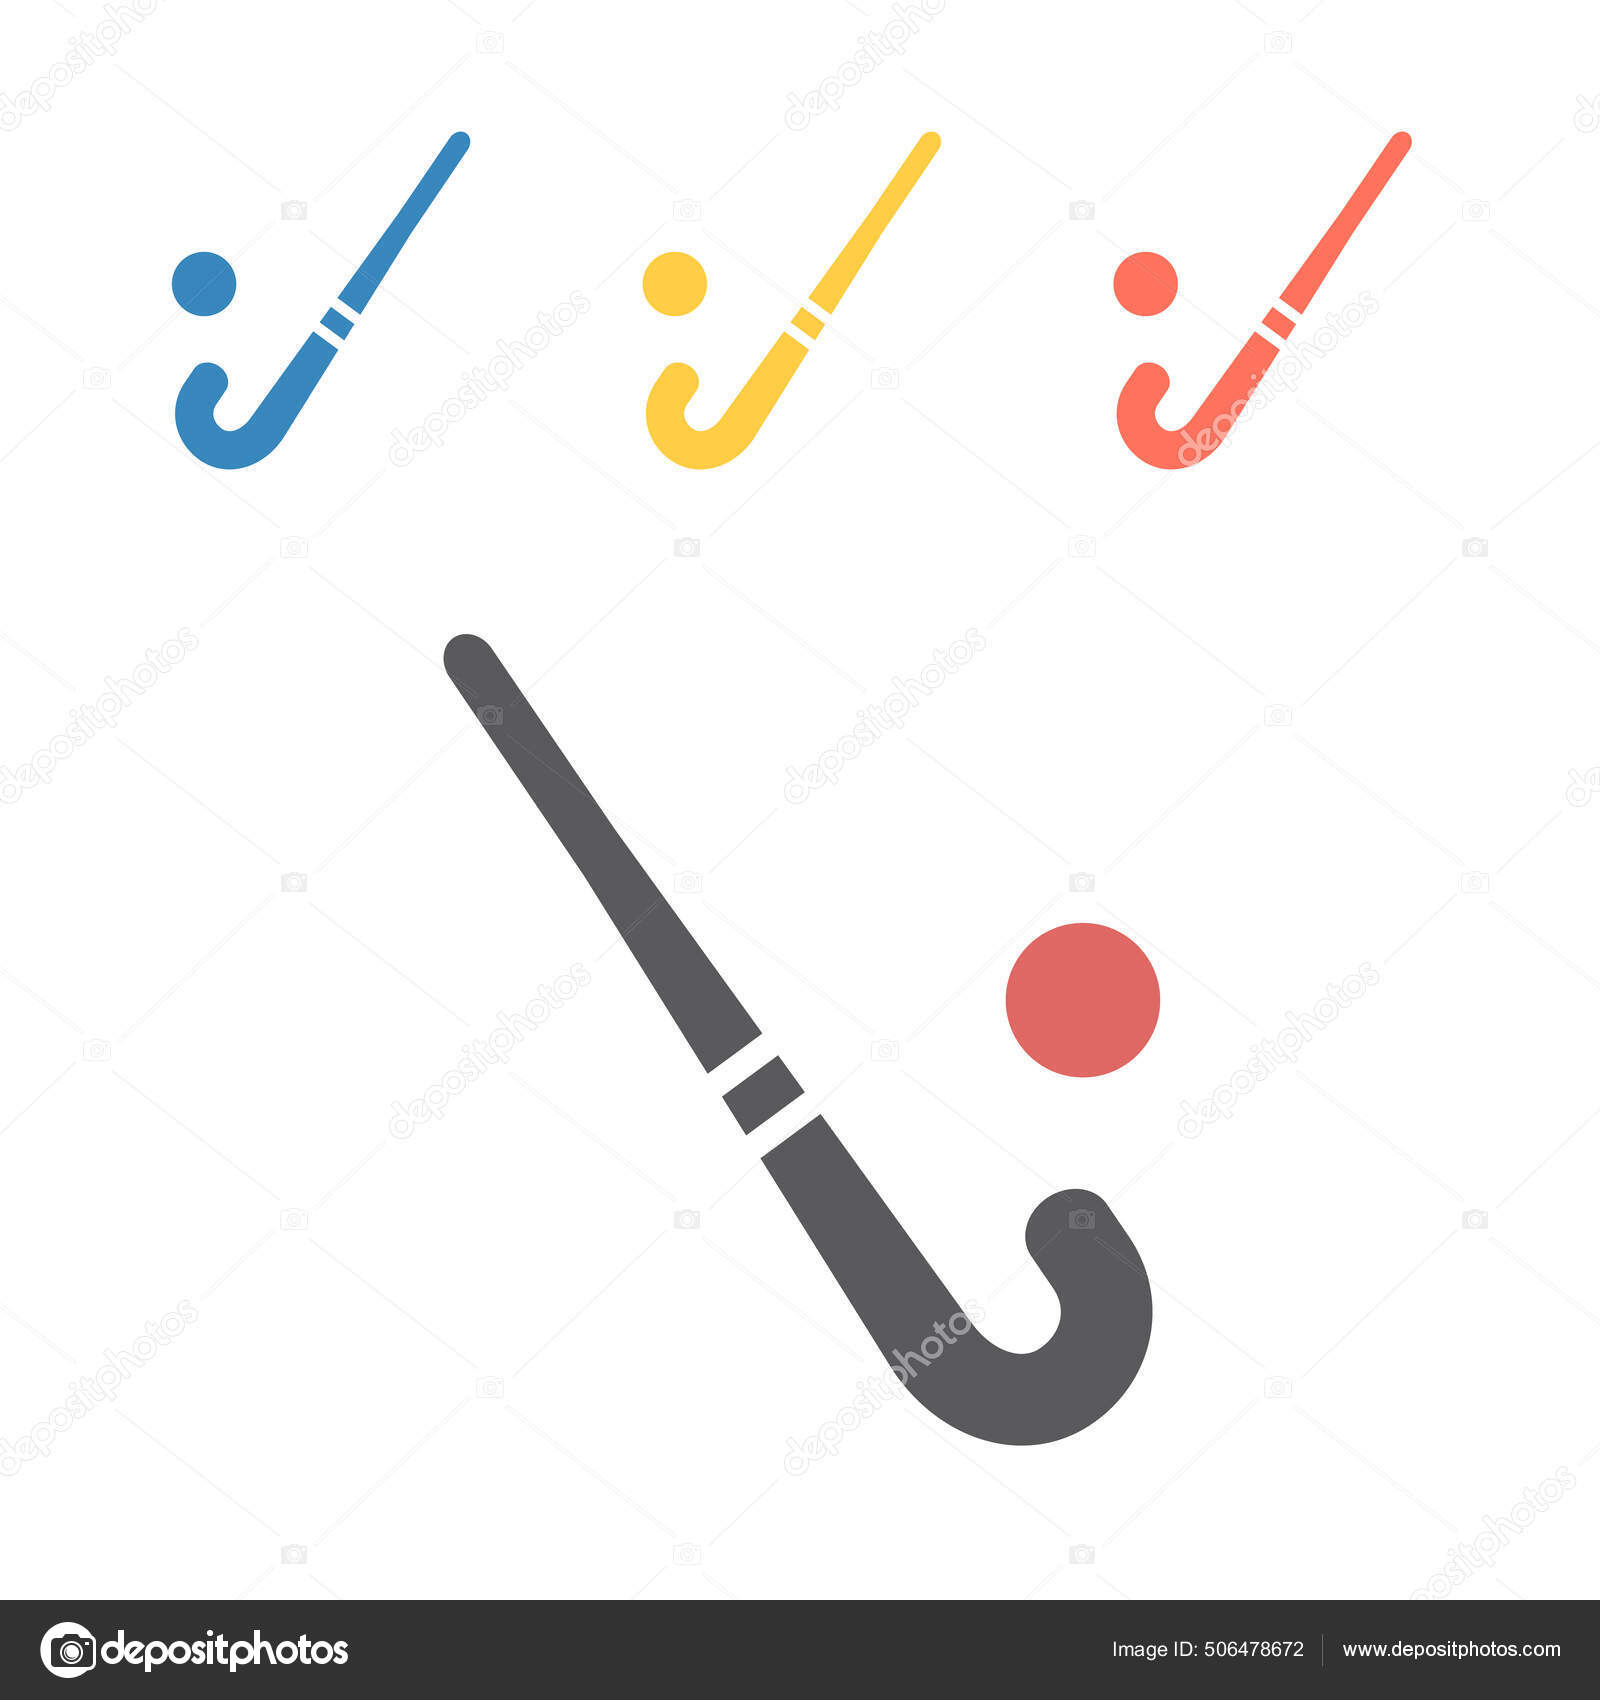 Hockey Stick And Ball Illustration Stock Illustration - Download